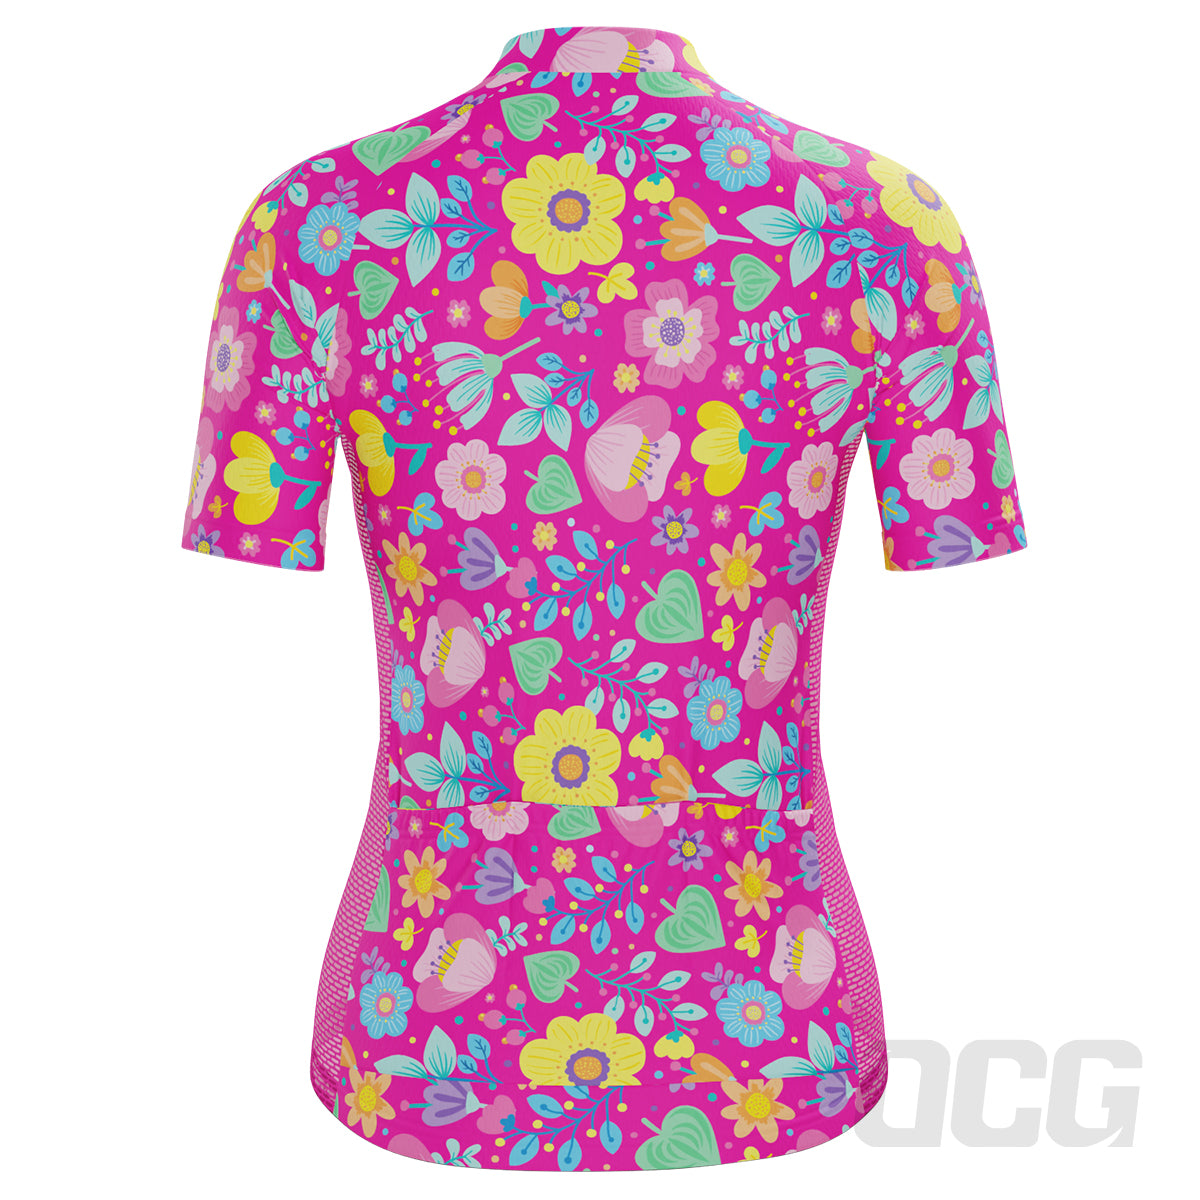 Women's Bouquet Floral Short Sleeve Cycling Jersey